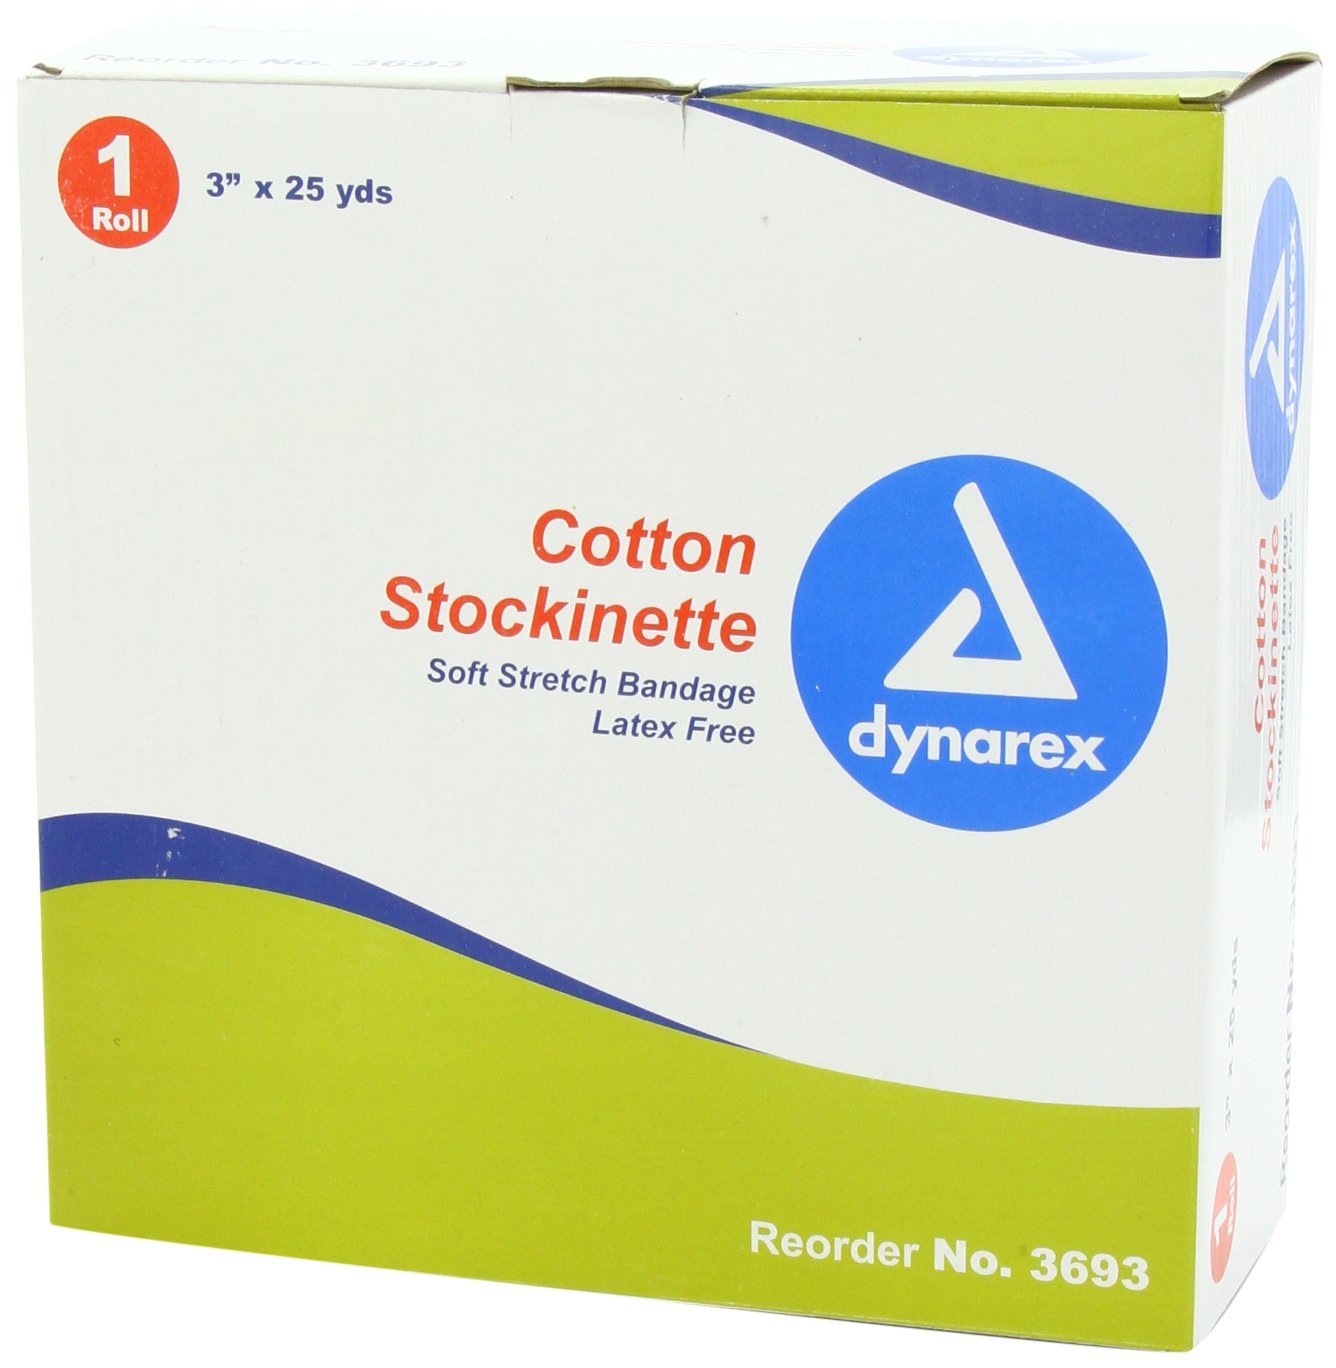 Dynarex Cotton Stockinette Soft Stretch Bandage - image 3 of 3